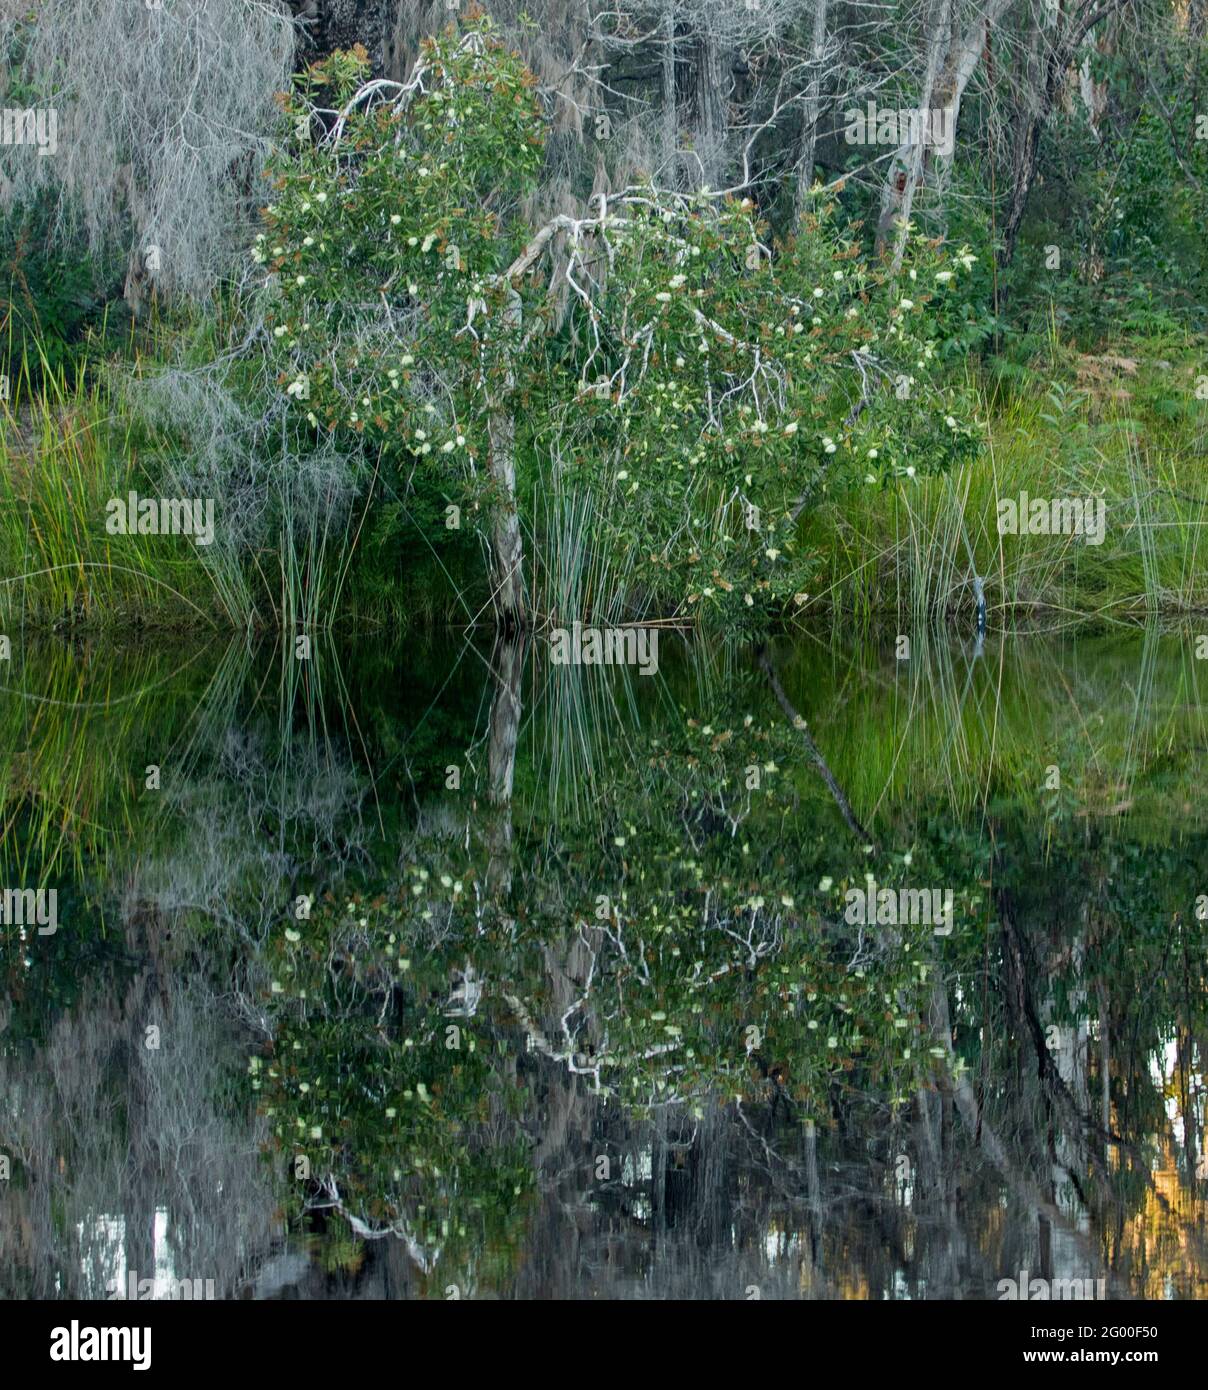 Flowering melaleuca / paperbark tree and other native vegetation reflected in mirror surface of dark water of Noosa River, Sunshine Coast, Australia Stock Photo